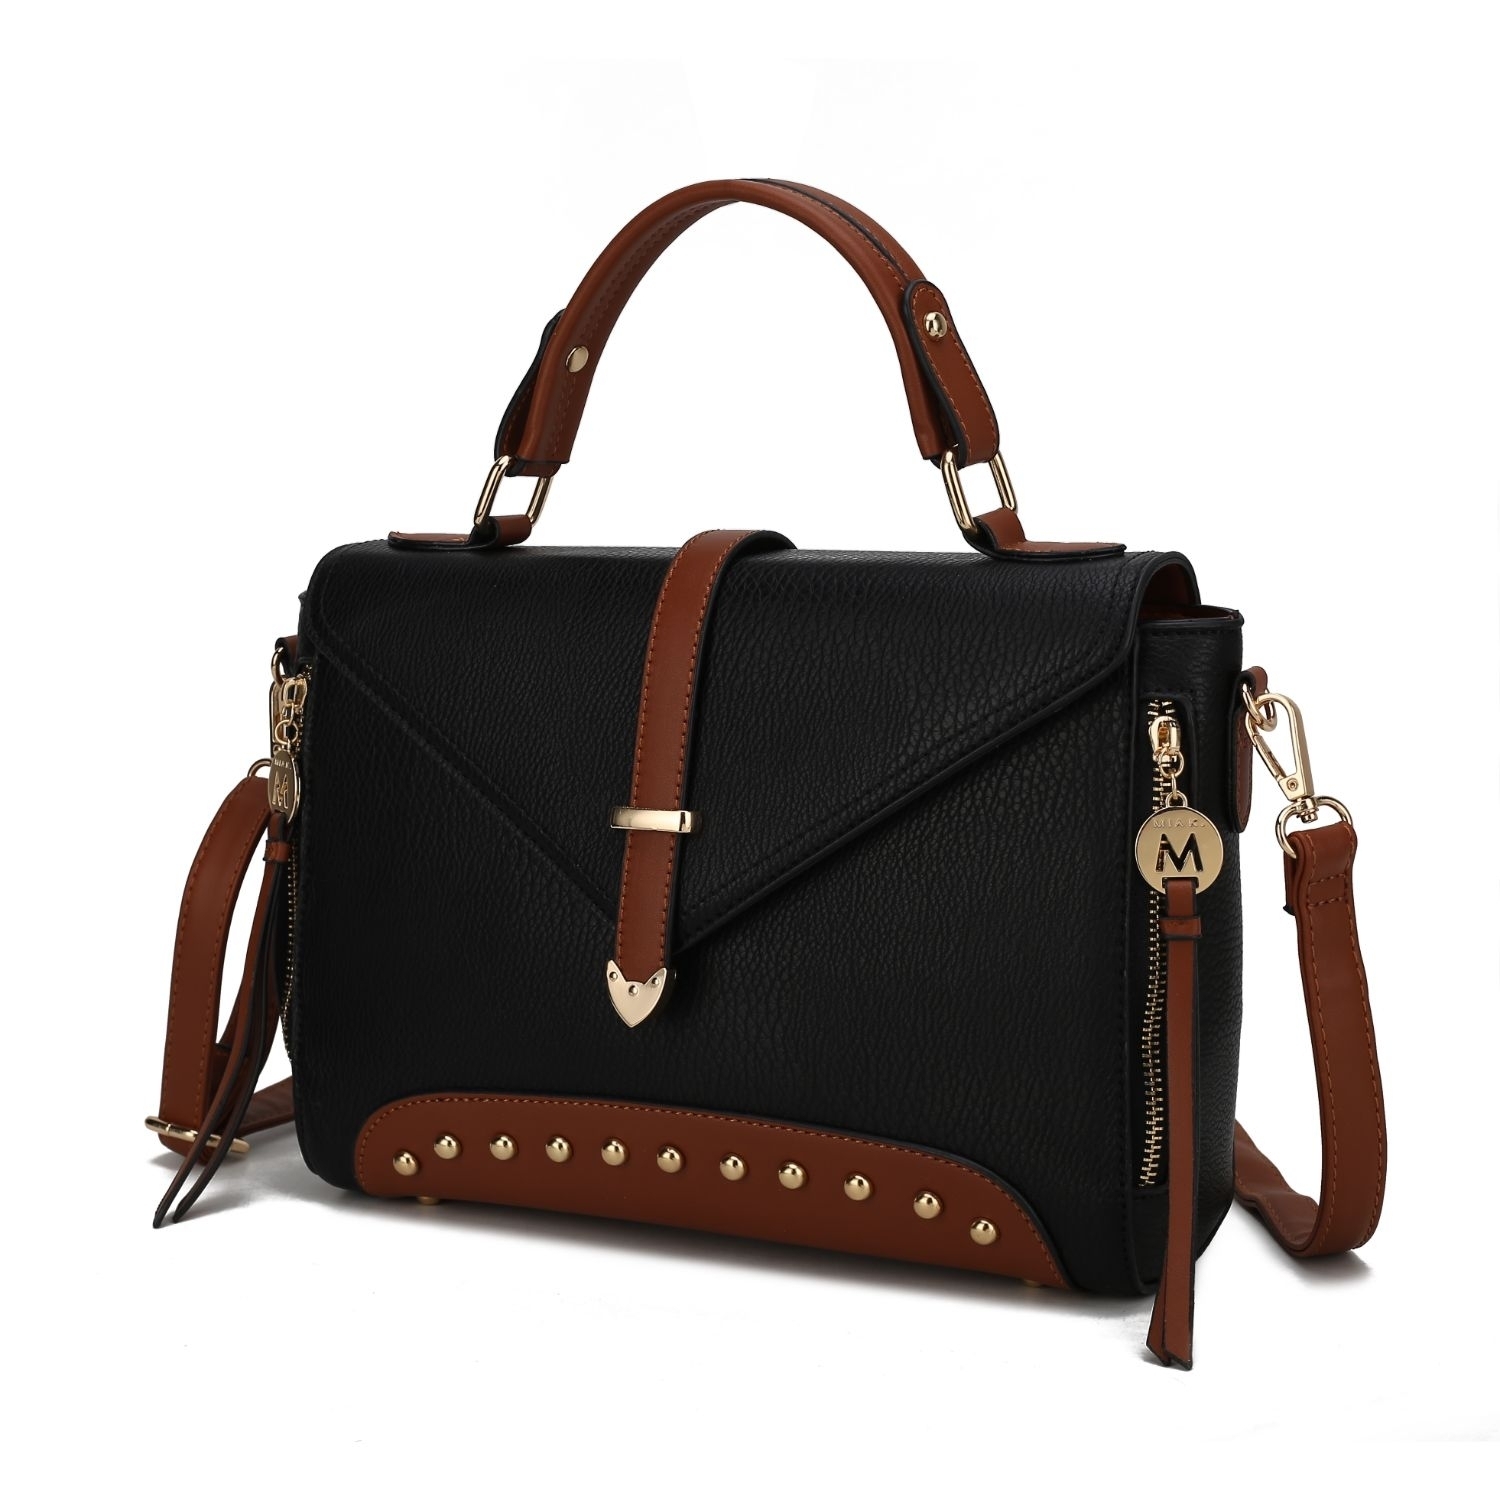 MKF Collection Angela Vegan Color-Block Leather Womens Satchel Handbag By Mia K - Navy